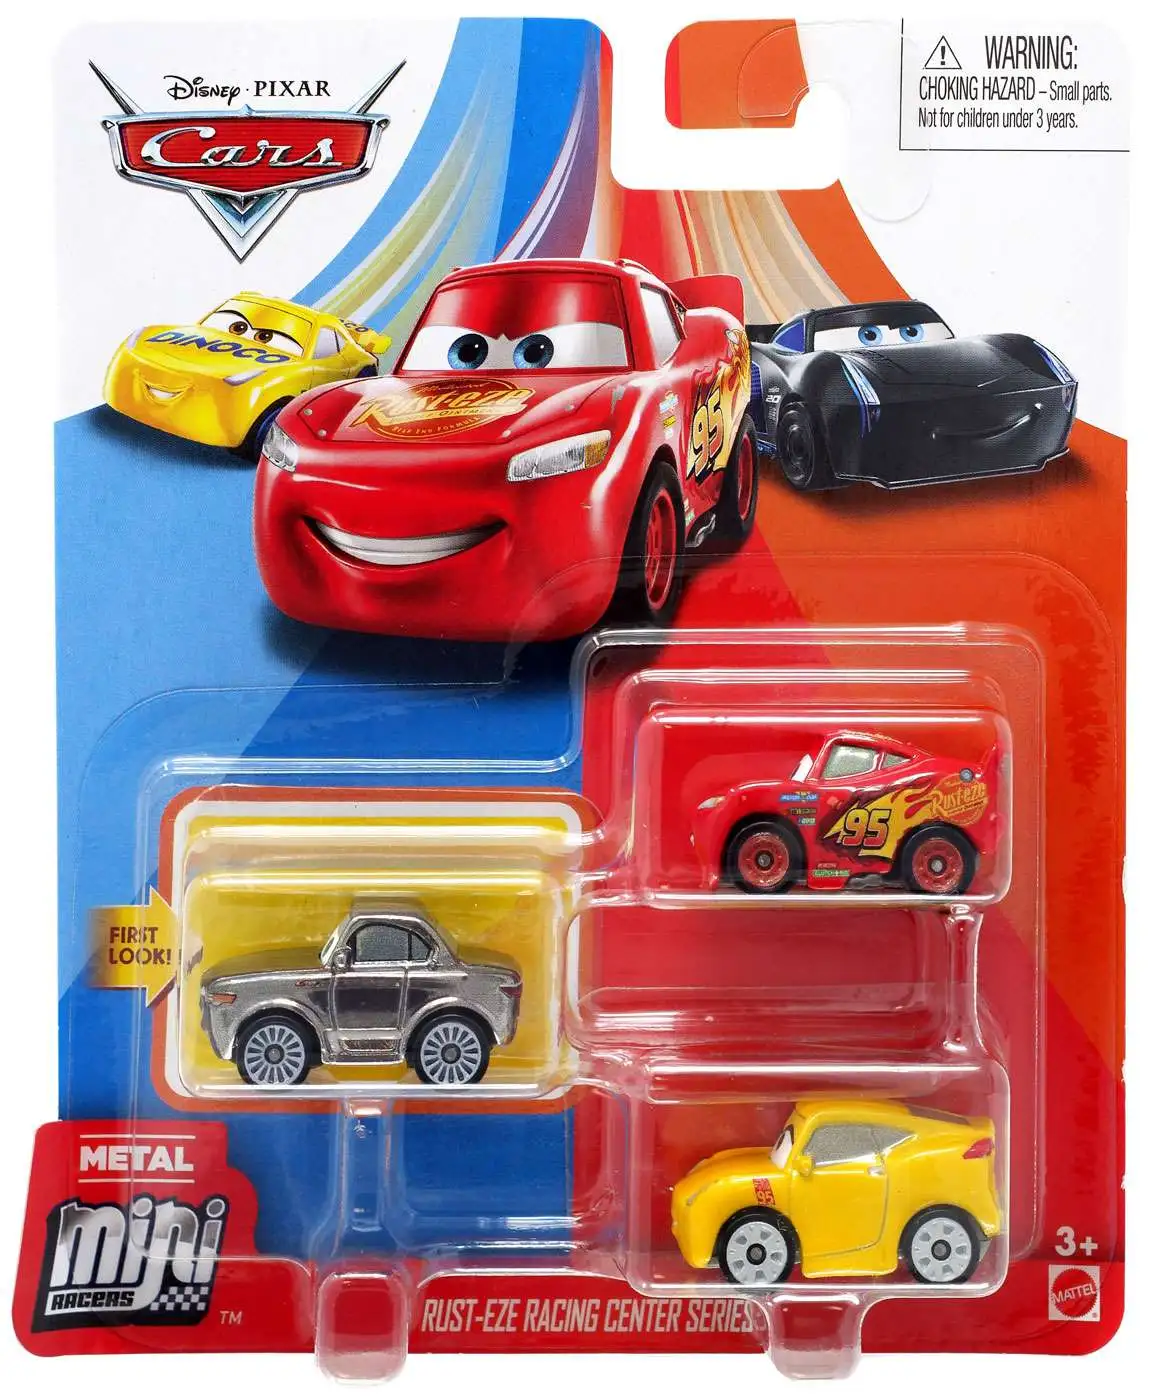 Rusteze Racing Centre Series Mini Racer Details about   Disney Pixar Cars 